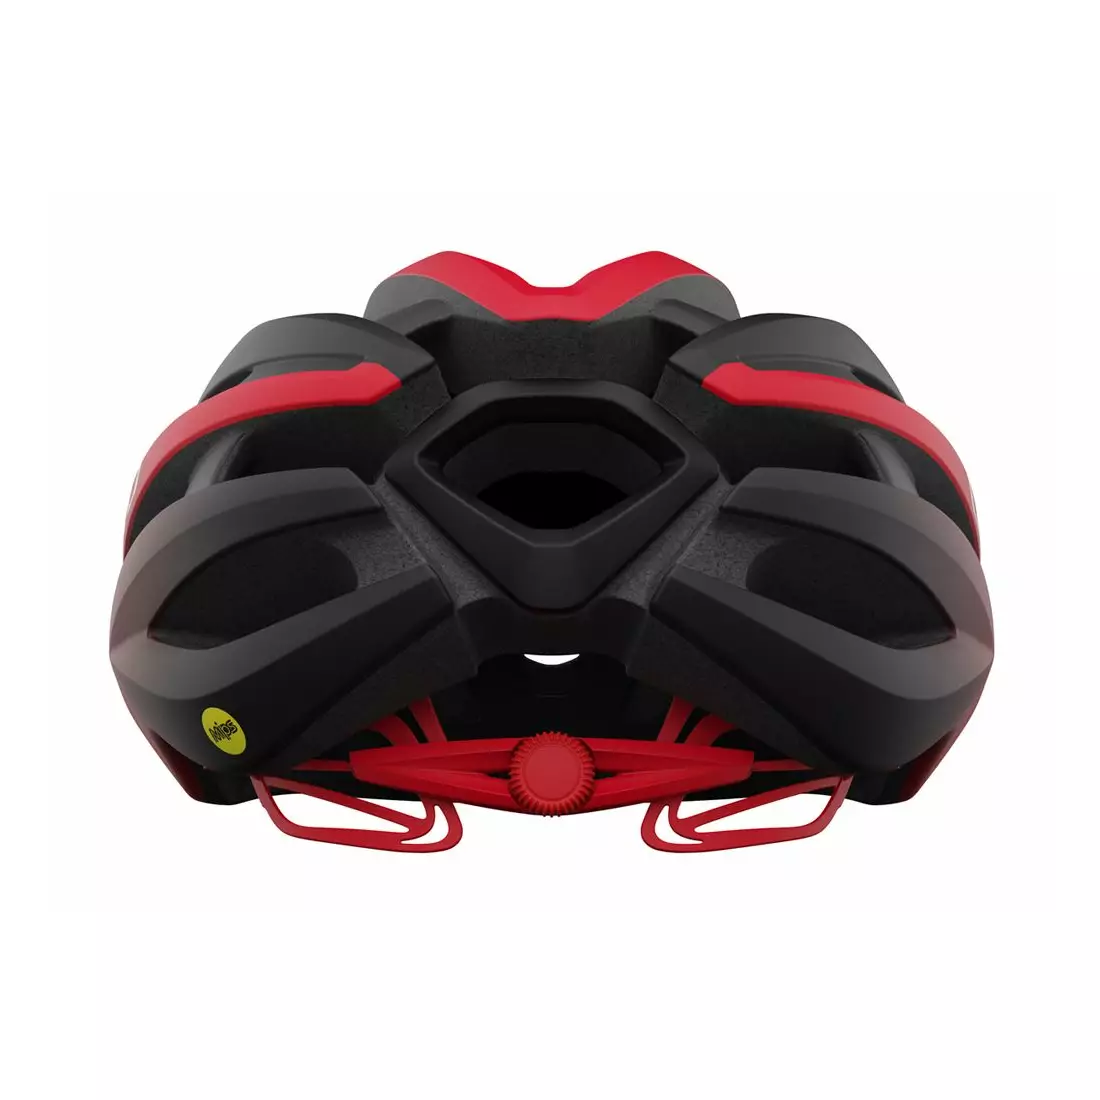 GIRO országúti kerékpáros sisak SYNTHE INTEGRATED MIPS II matte black bright red GR-7130770